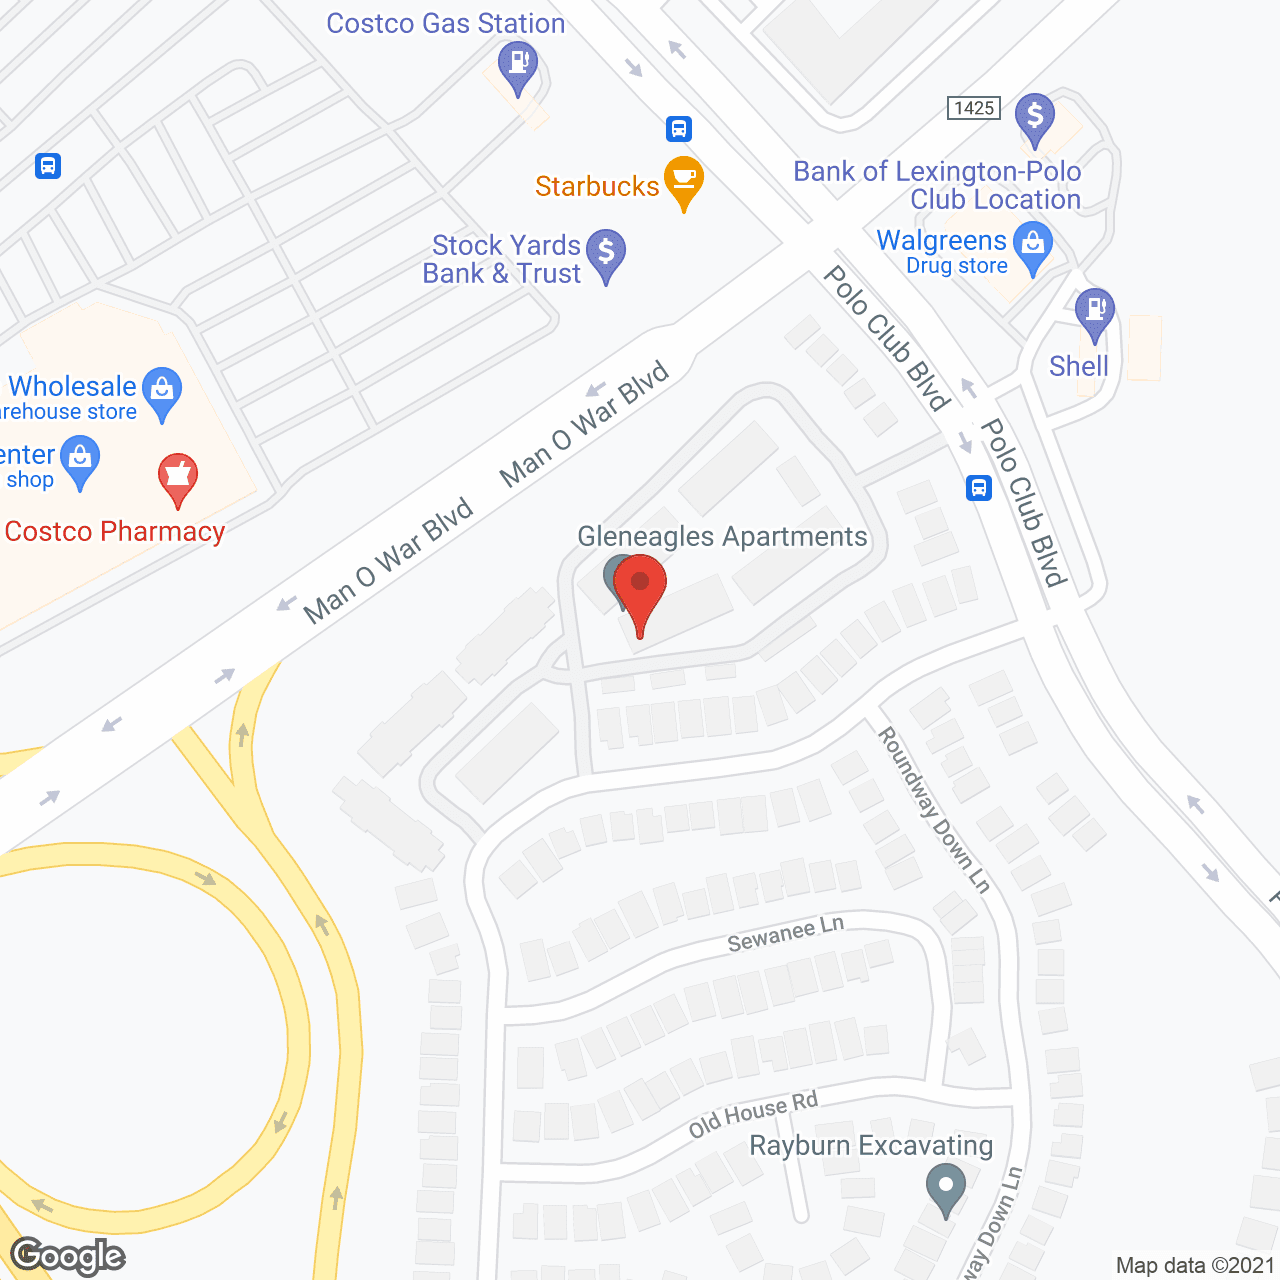 Gleneagles Apartments in google map